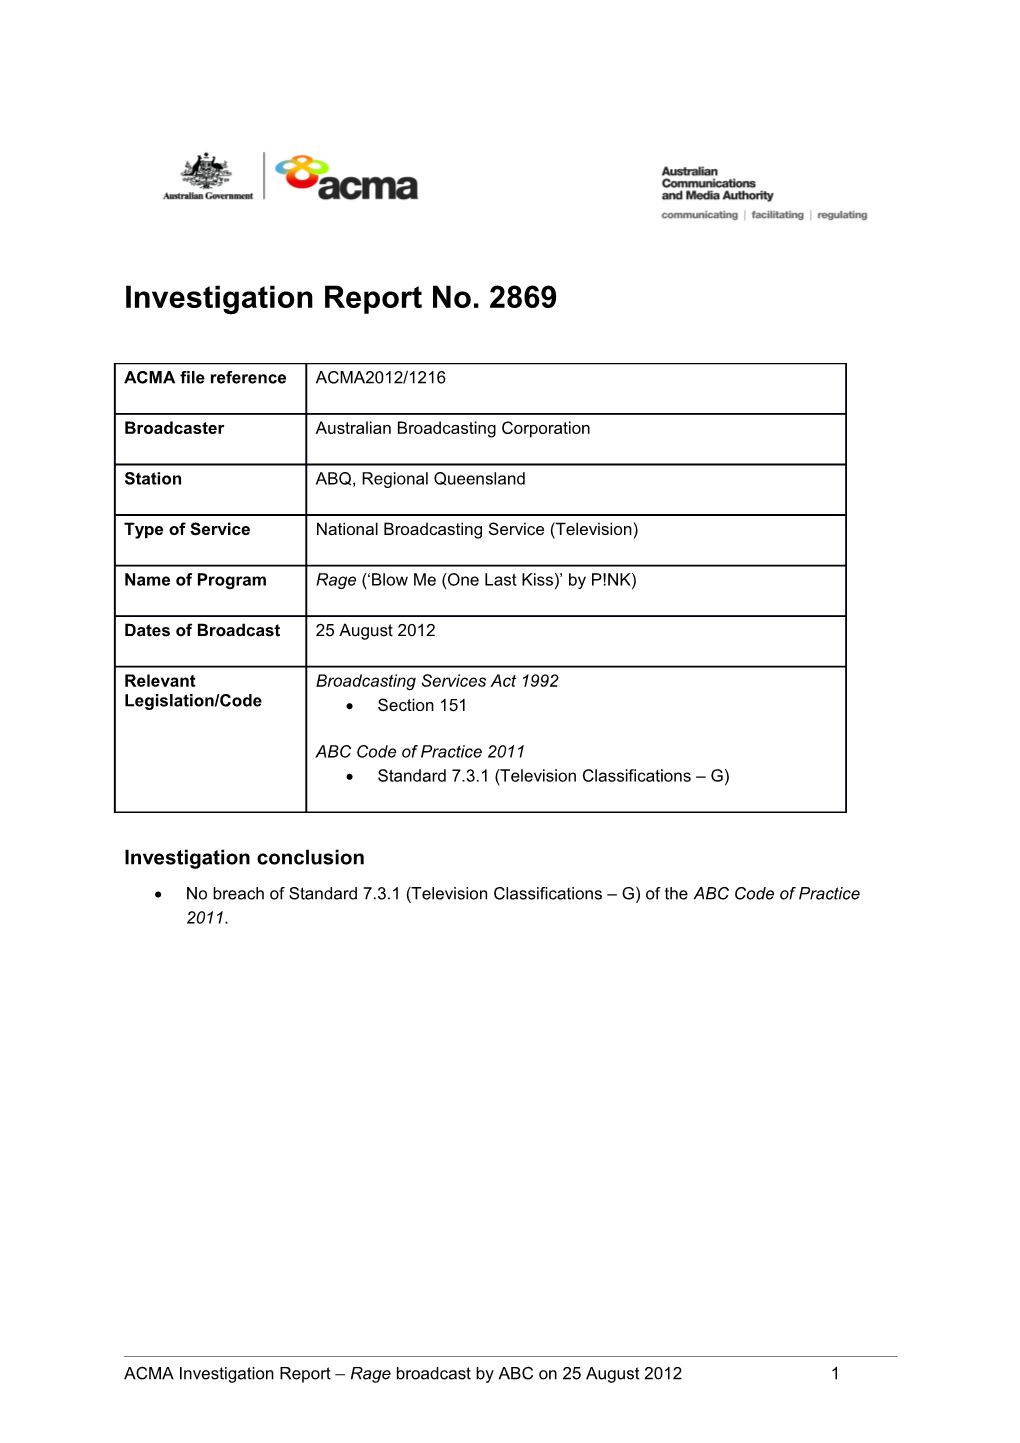 ABC (ABQ) - ACMA Investigation Report 2869